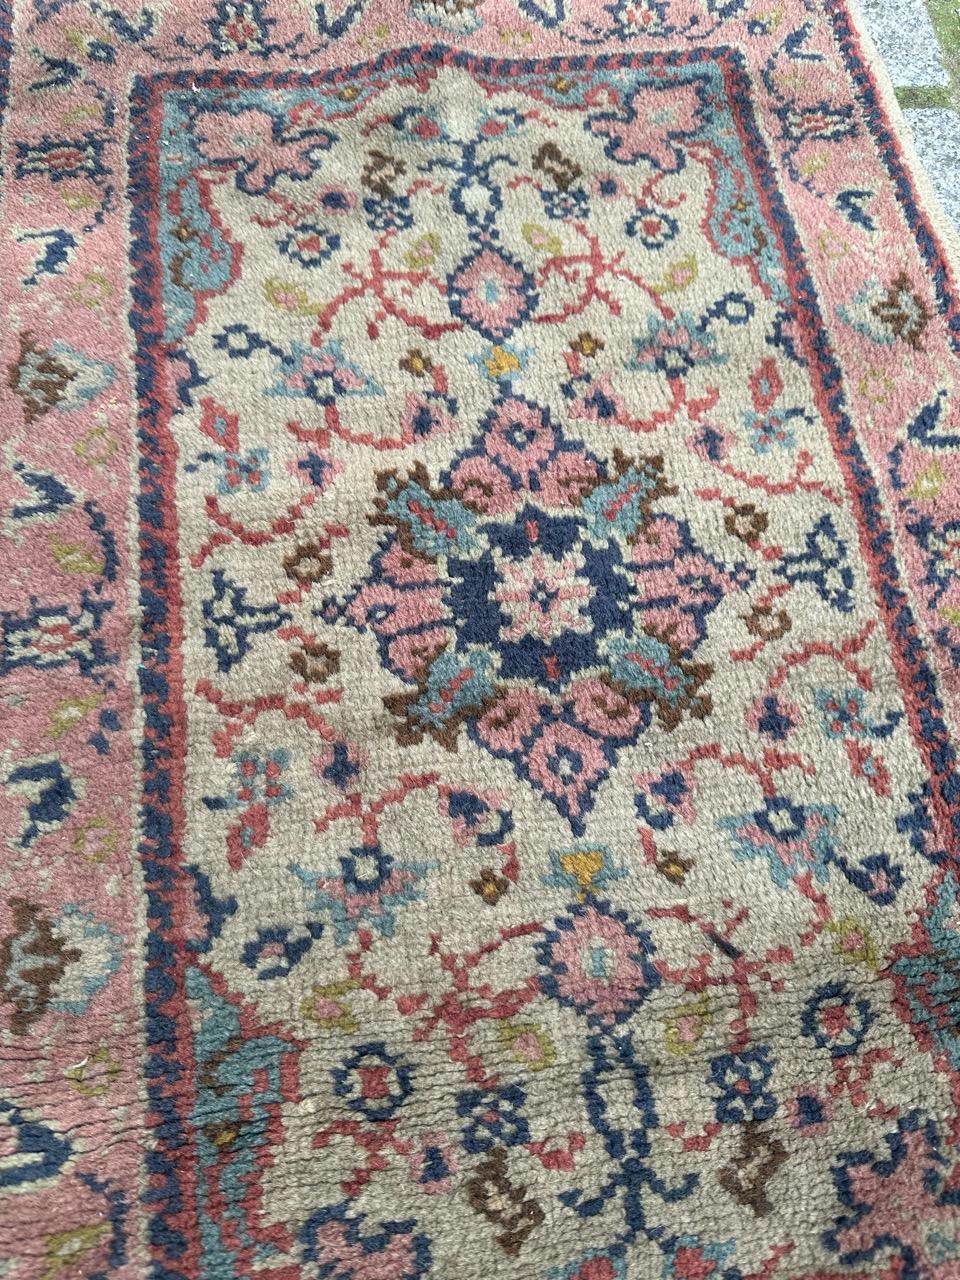 20th Century Bobyrug’s little antique Moroccan oushak design rug